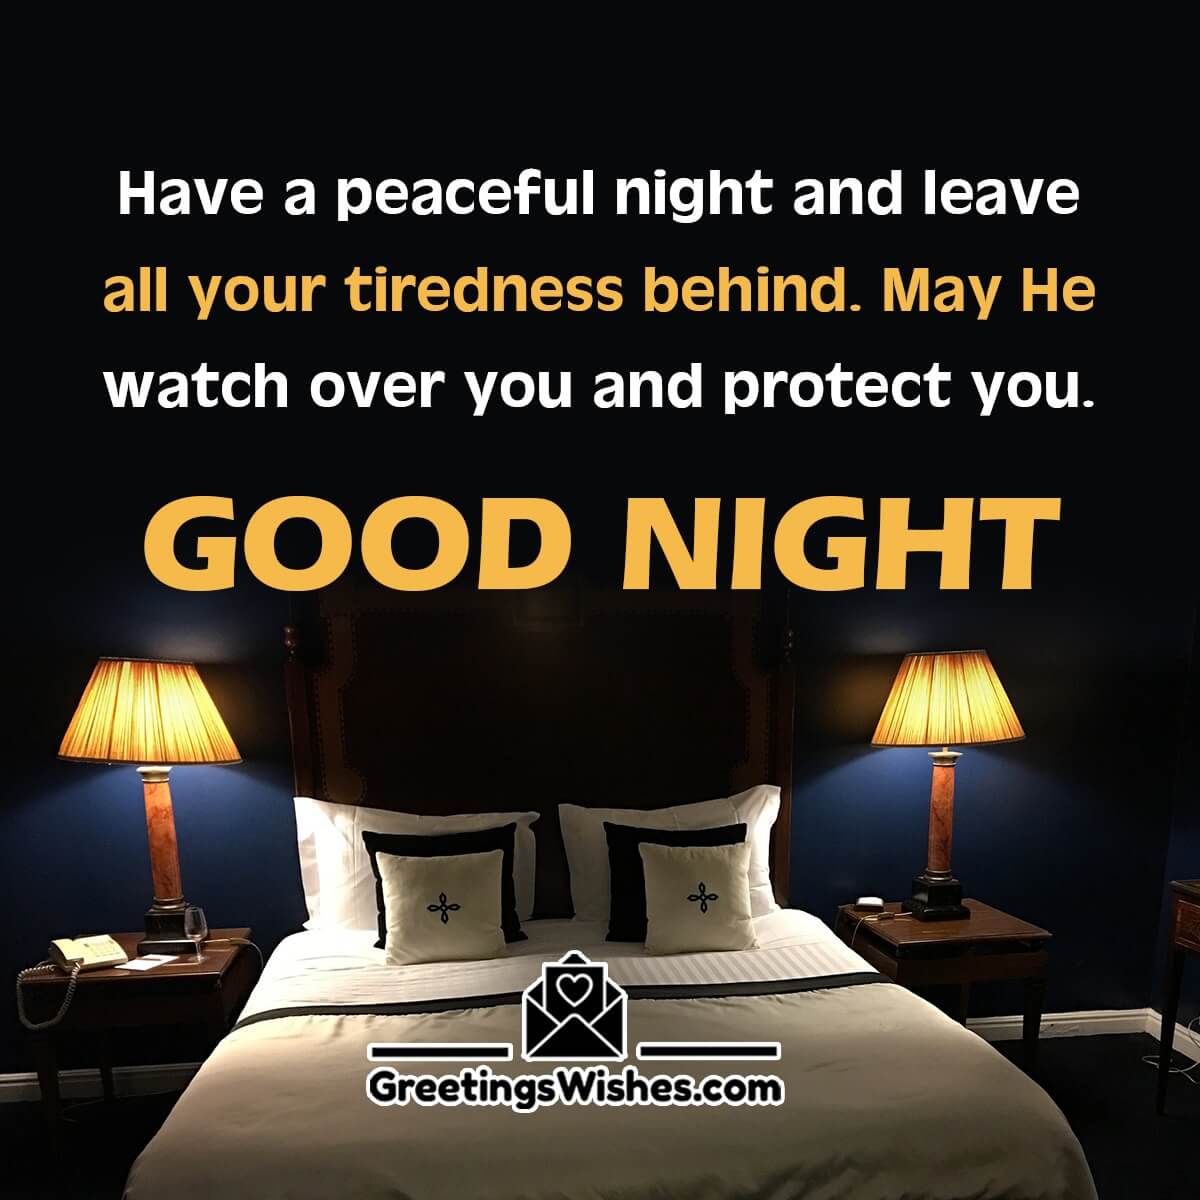 Good Night Prayer Wishes - Greetings Wishes